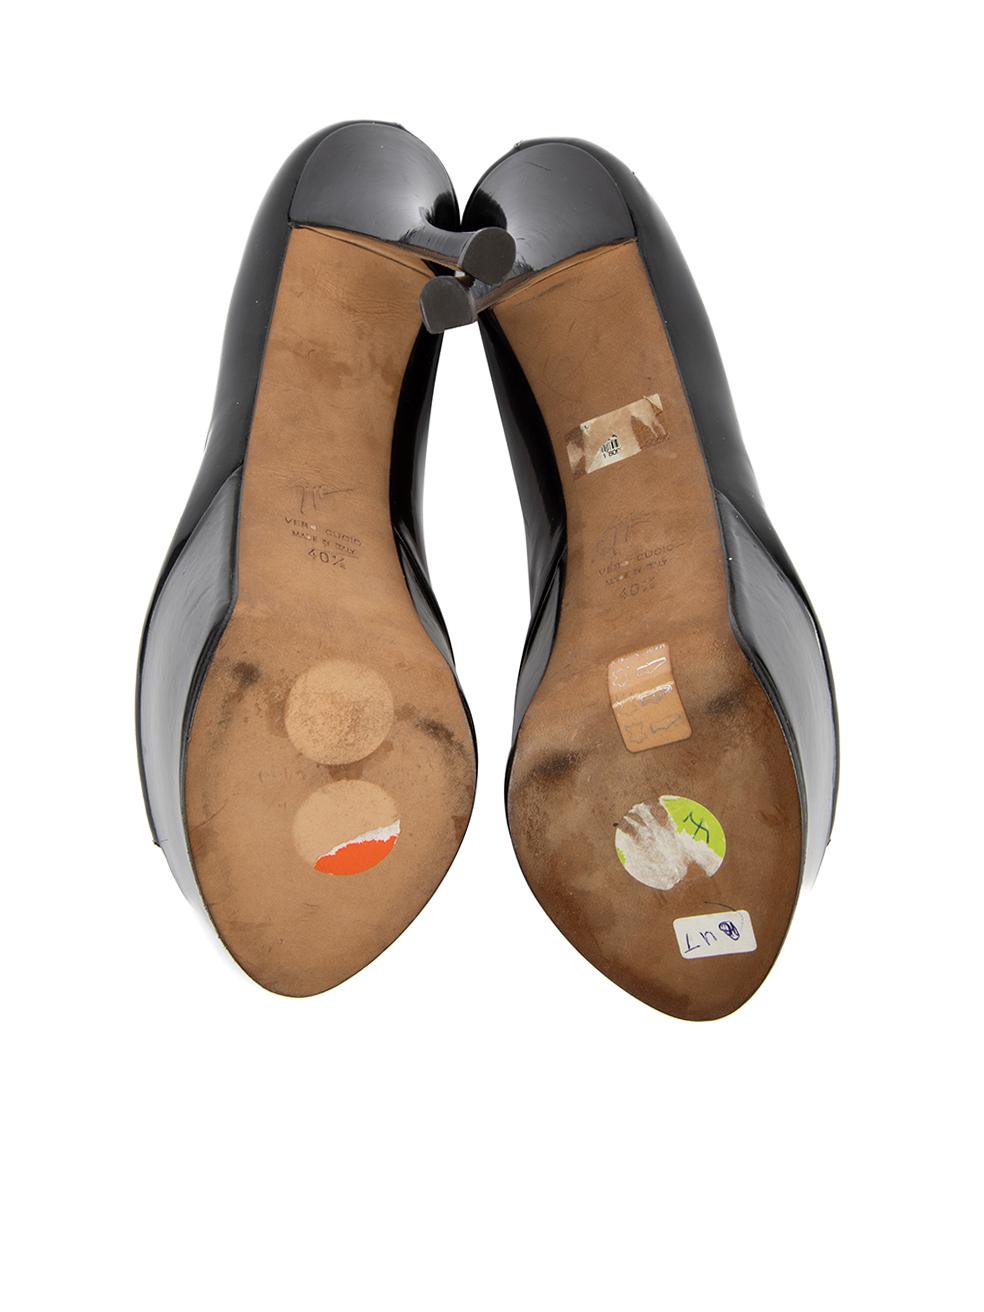 Giuseppe Zanotti Women's Black Patent Platform Peep Toe Heels For Sale 1